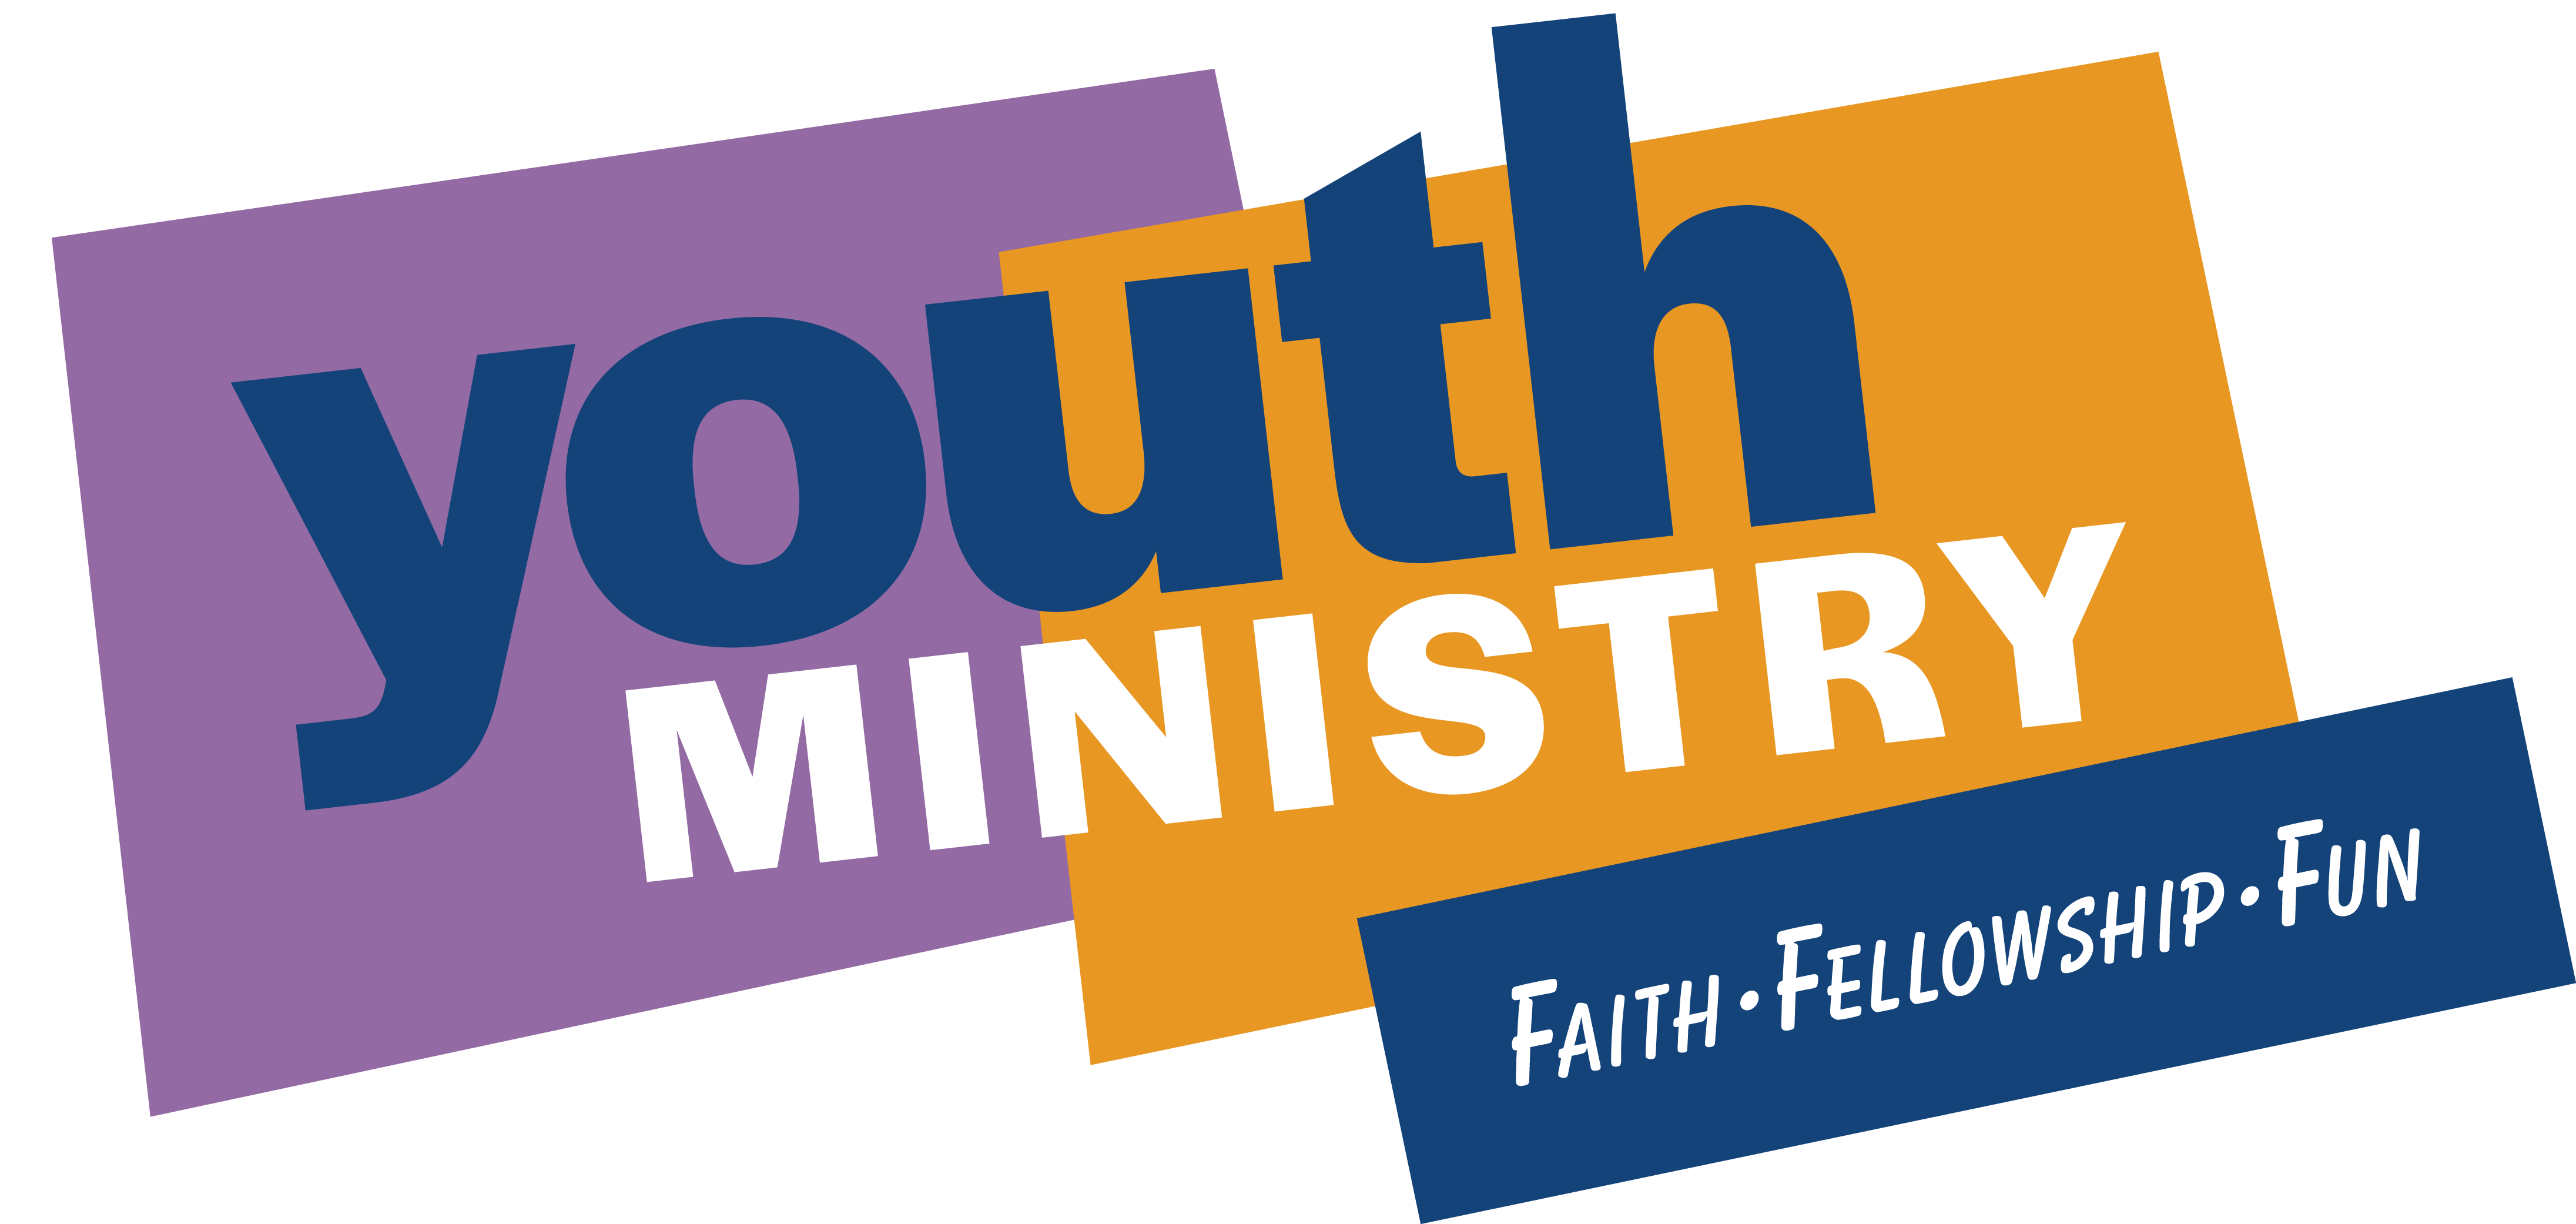 youth ministry, faith, fellowship, fun